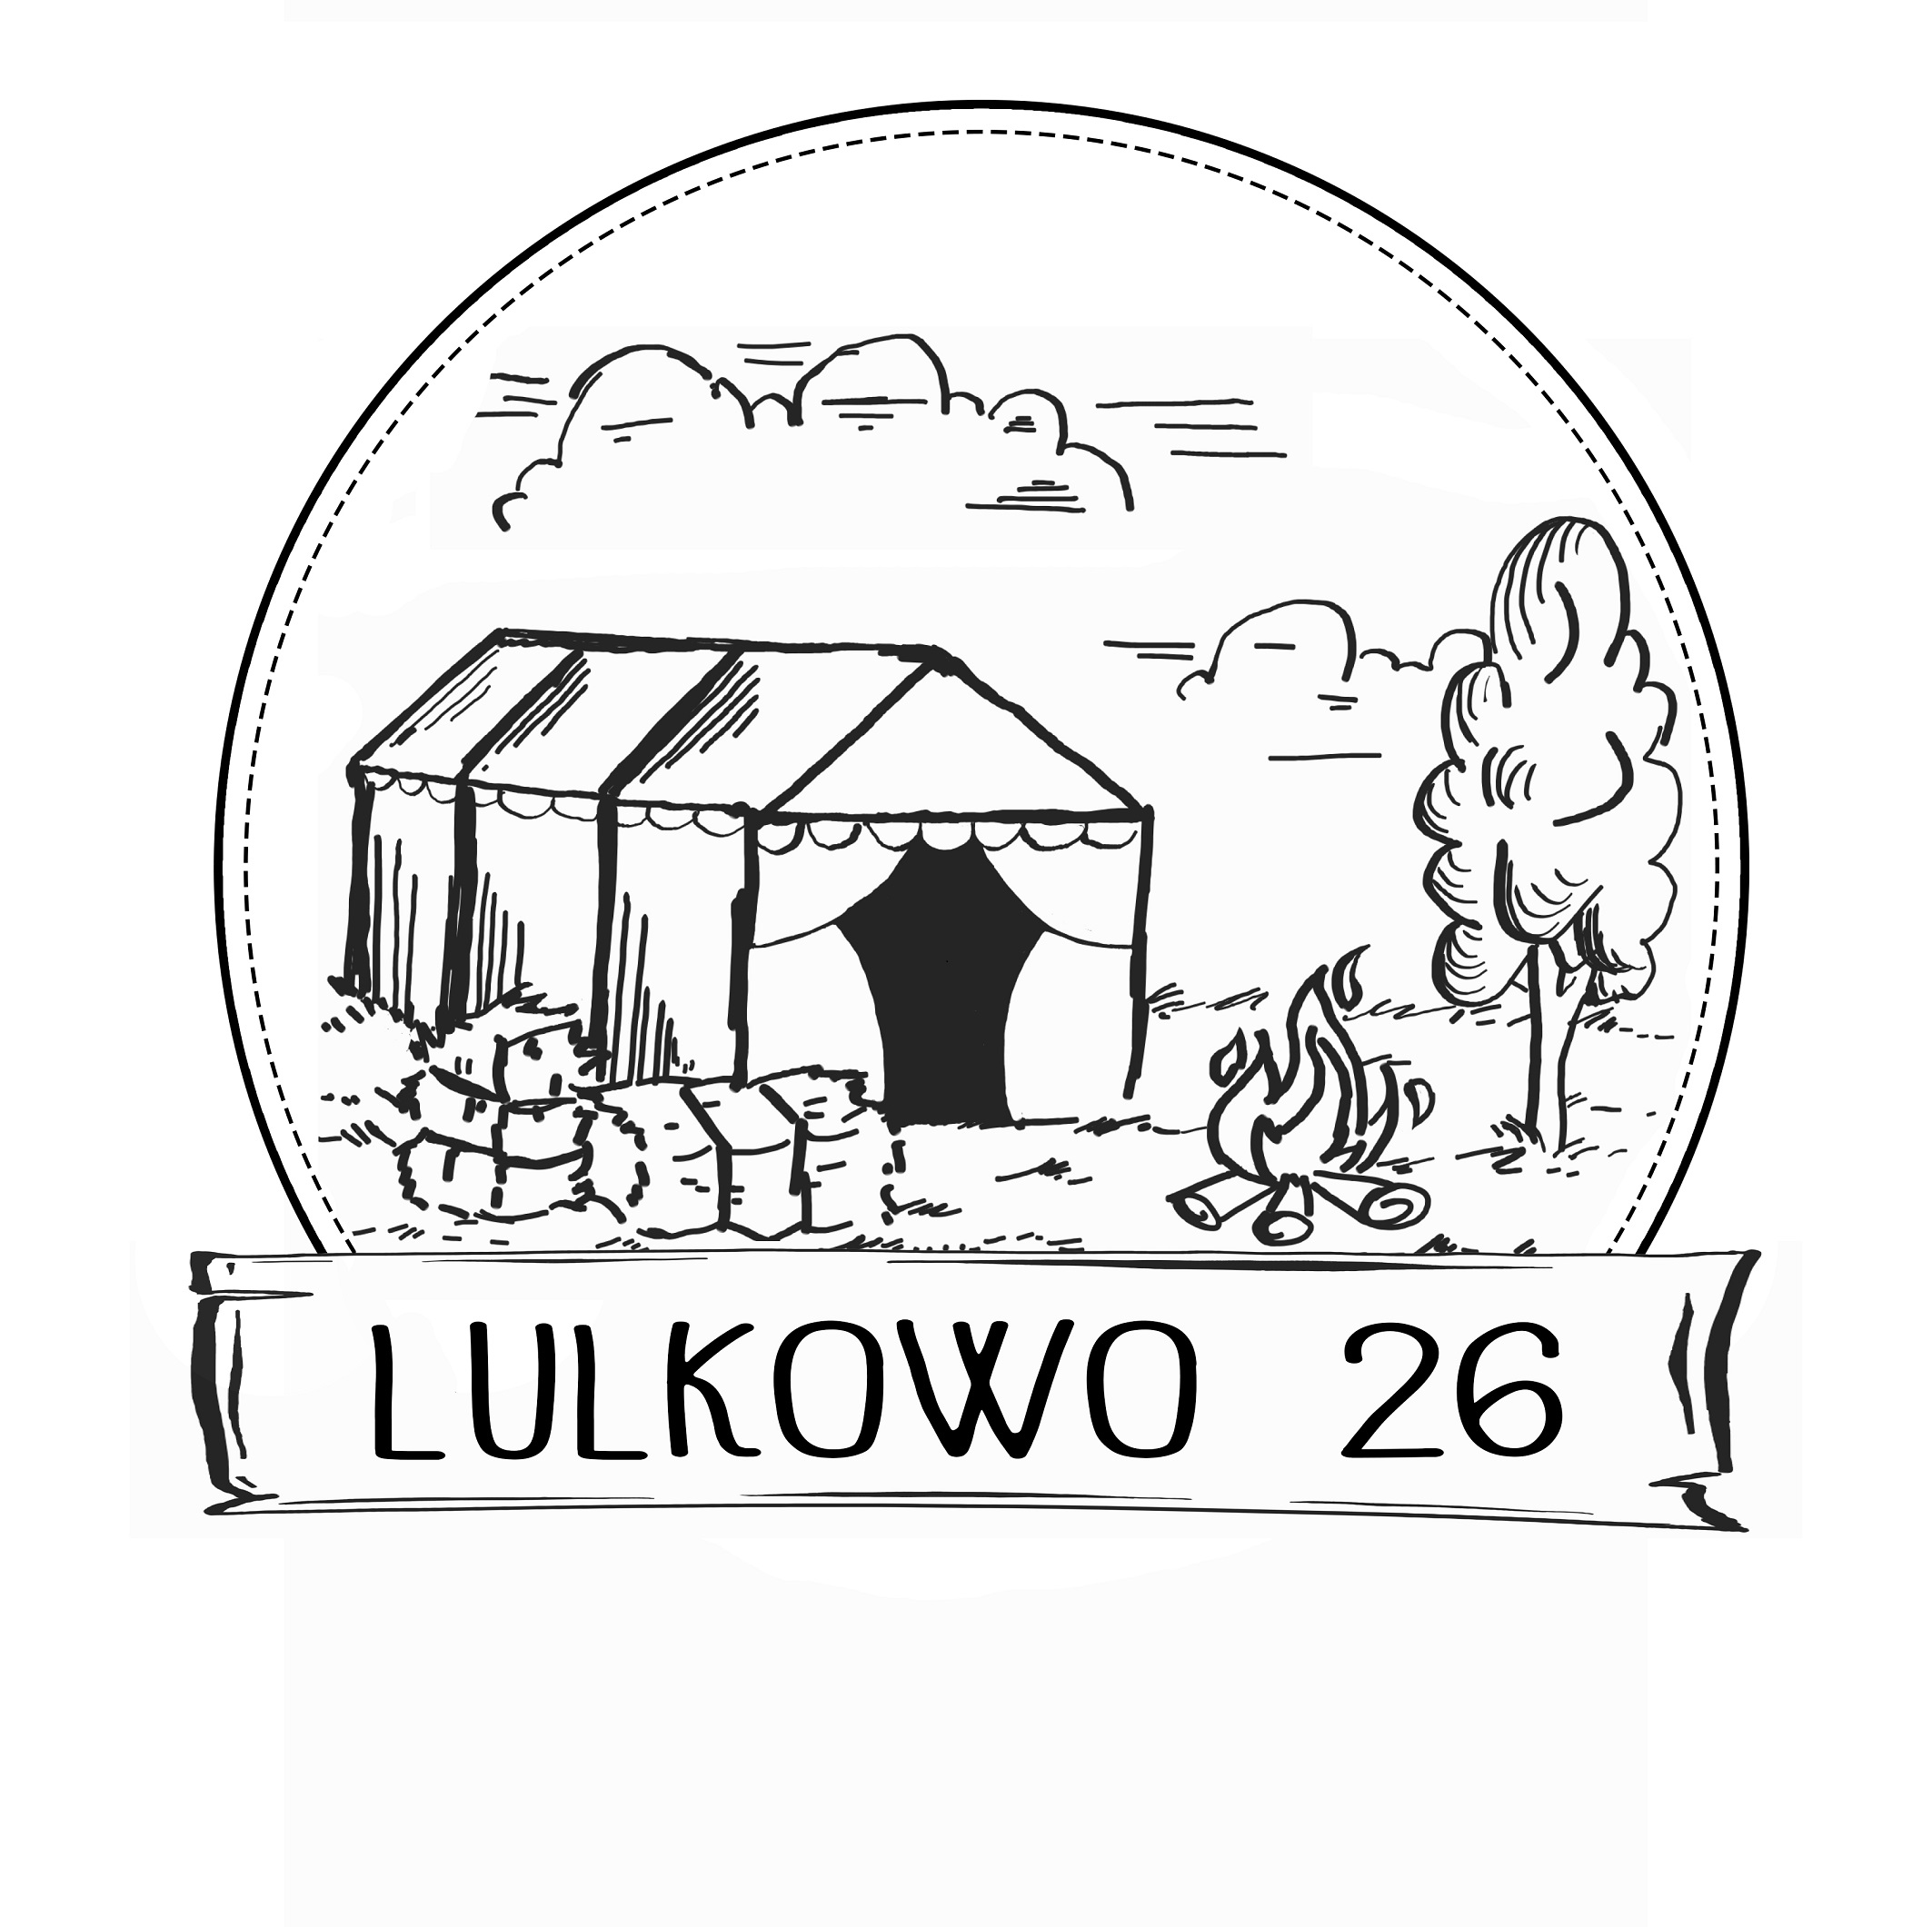 Logo lulkowo 26